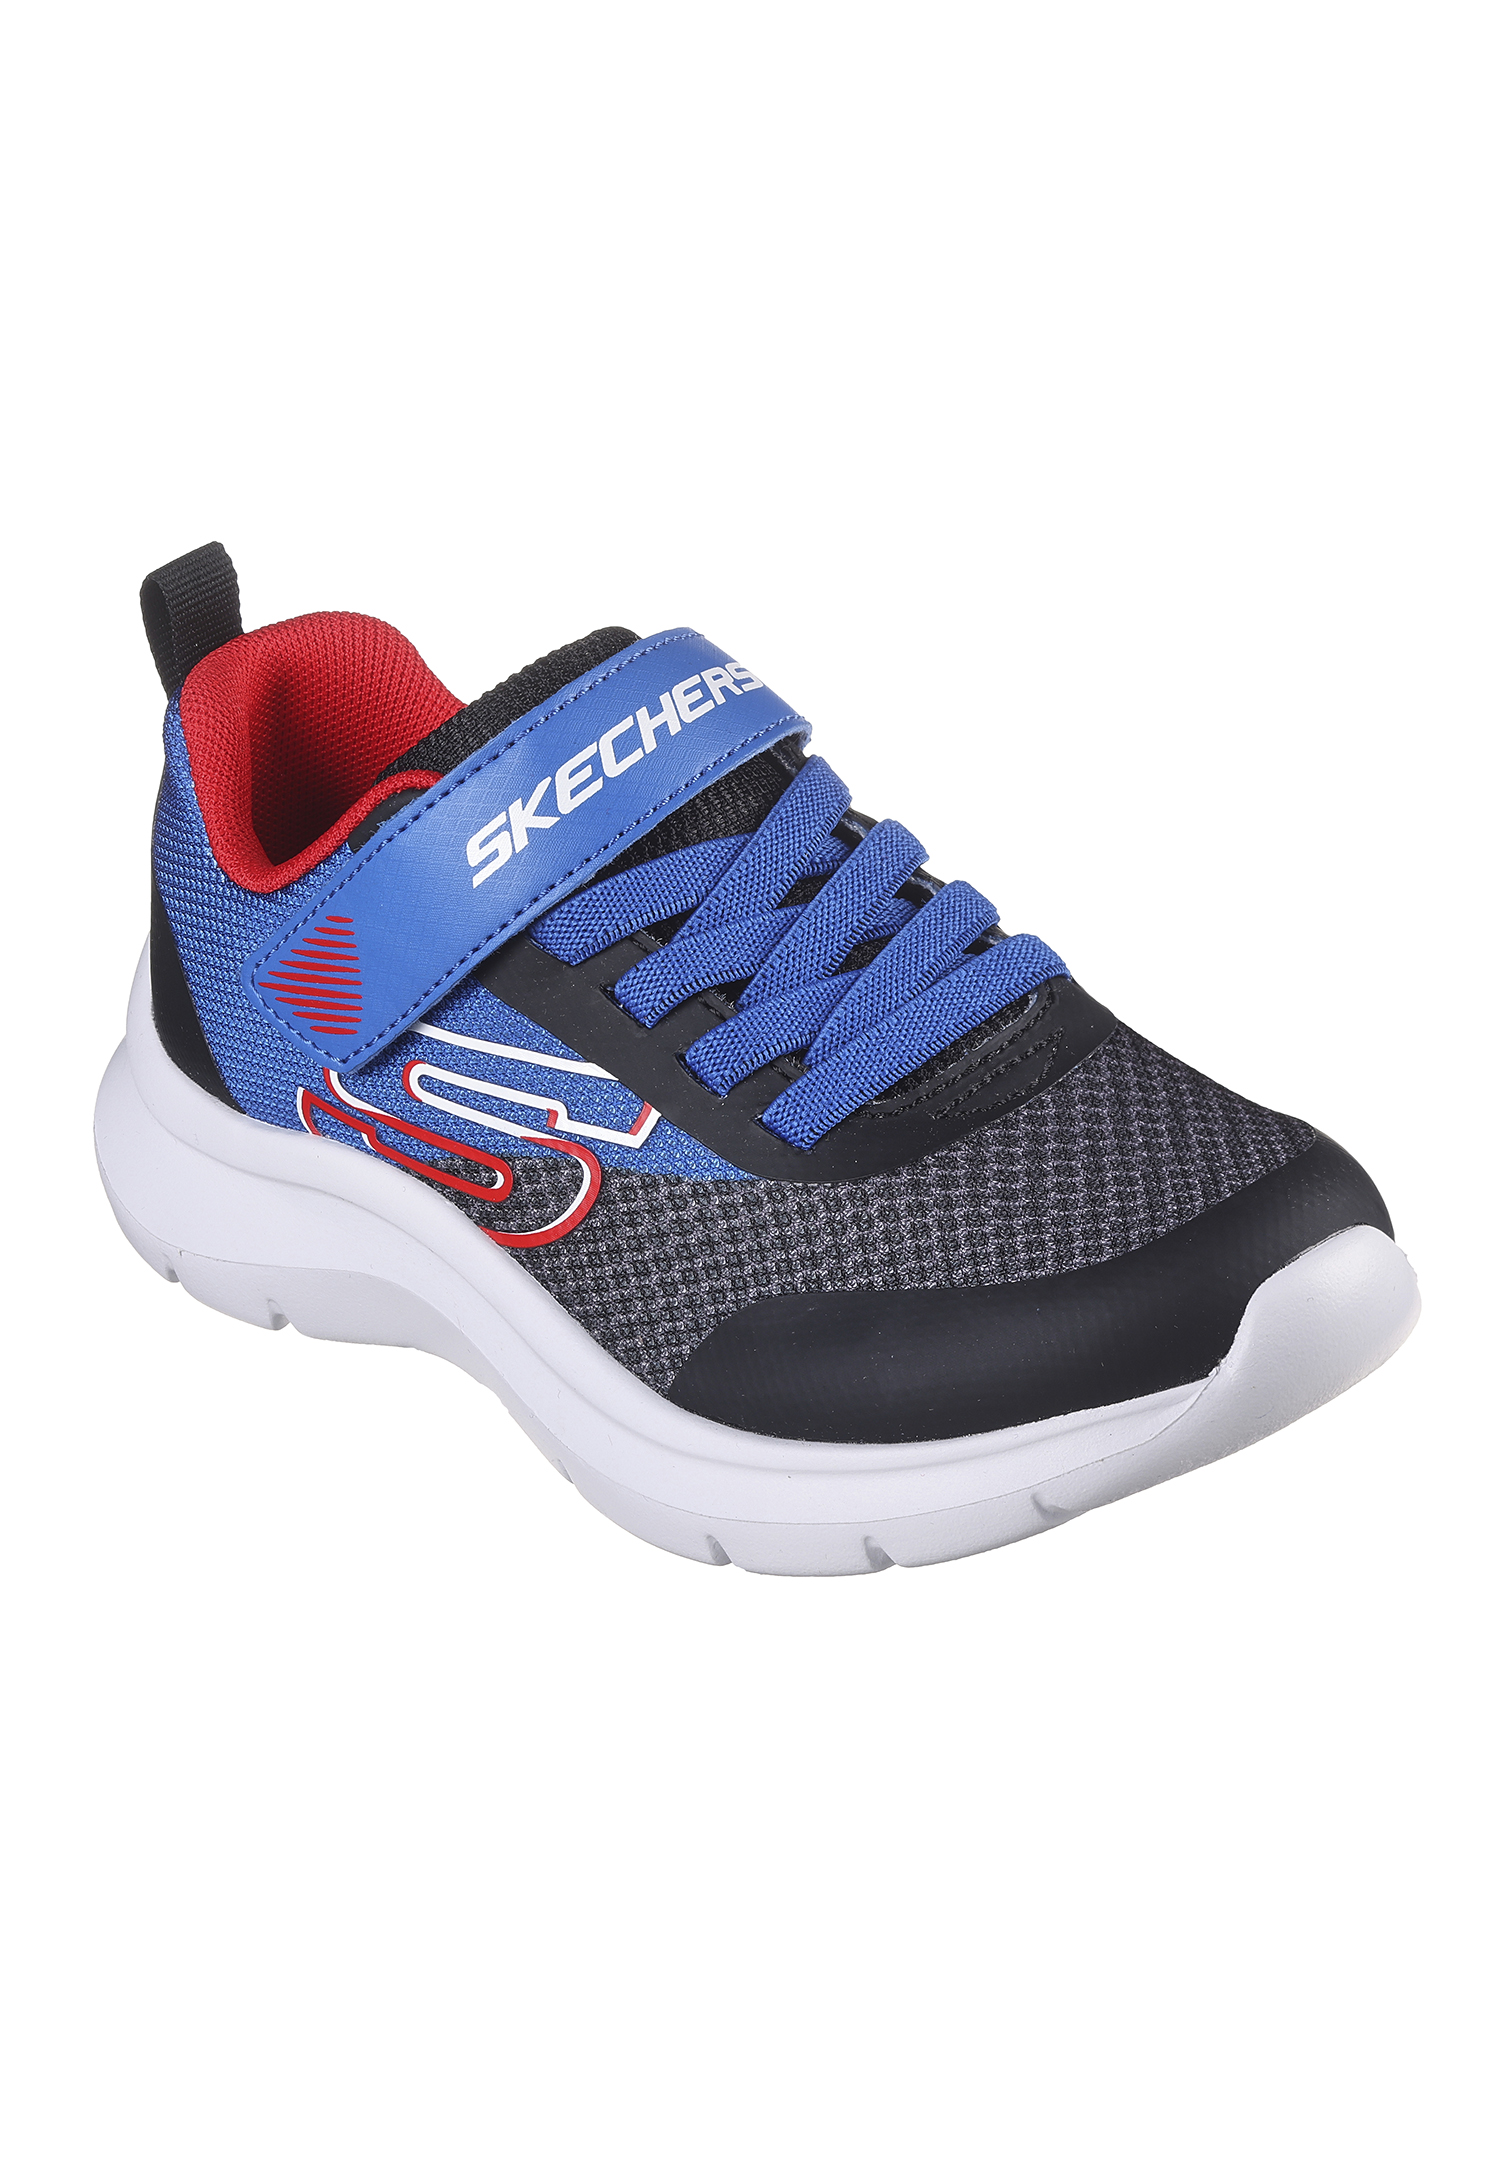 Skechers Skech Fast -Solar-Squad Kinder Sneaker Schuhe 403879L RYBK blau/schwarz